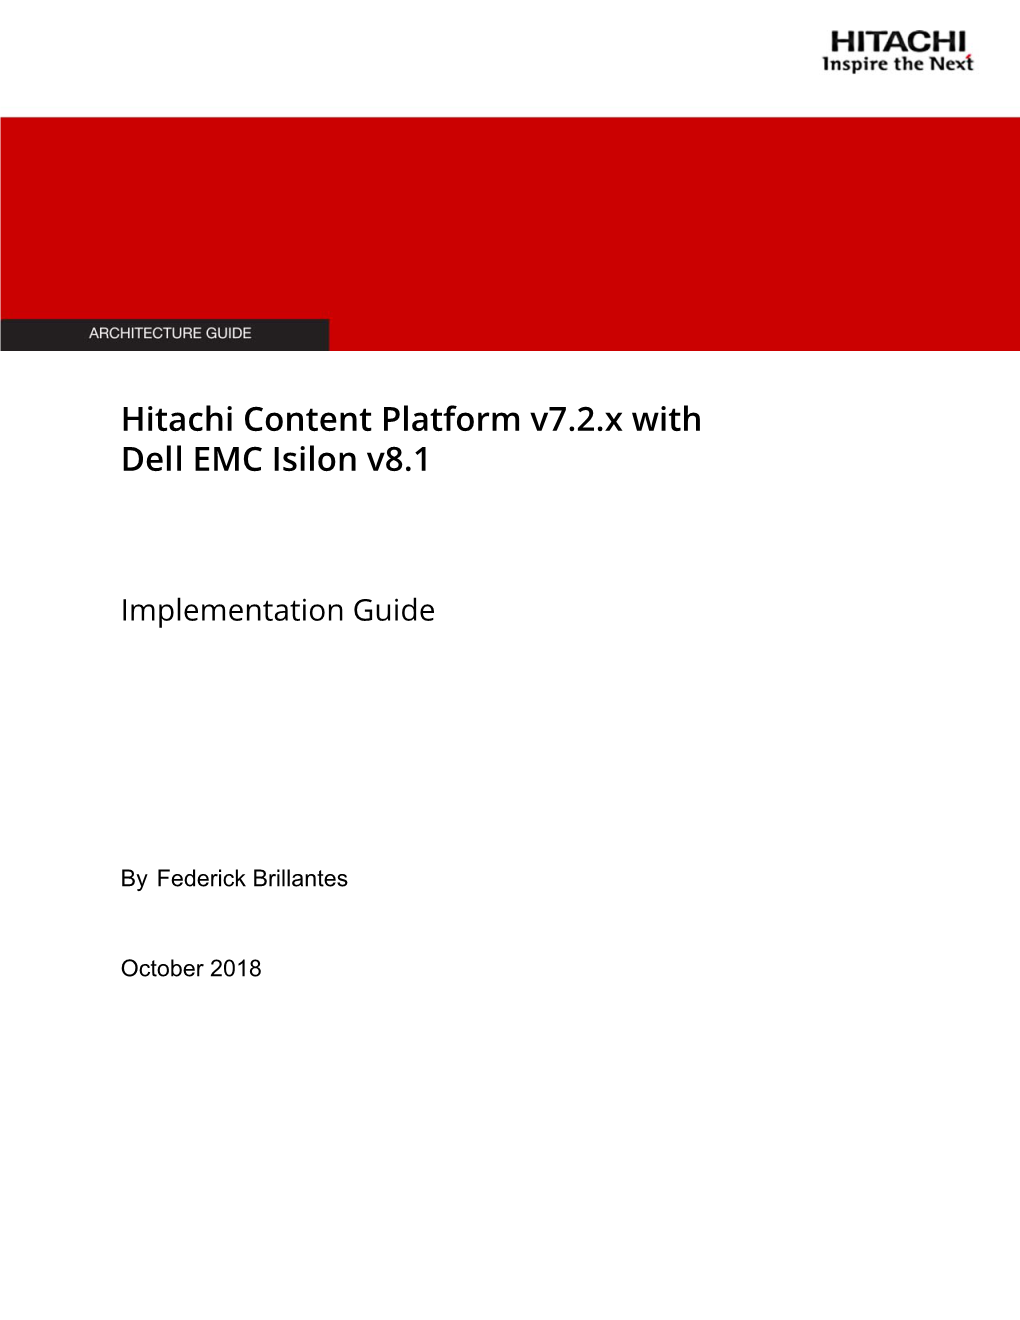 Hitachi Content Platform V7.2.X with Dell EMC Isilon V8.1